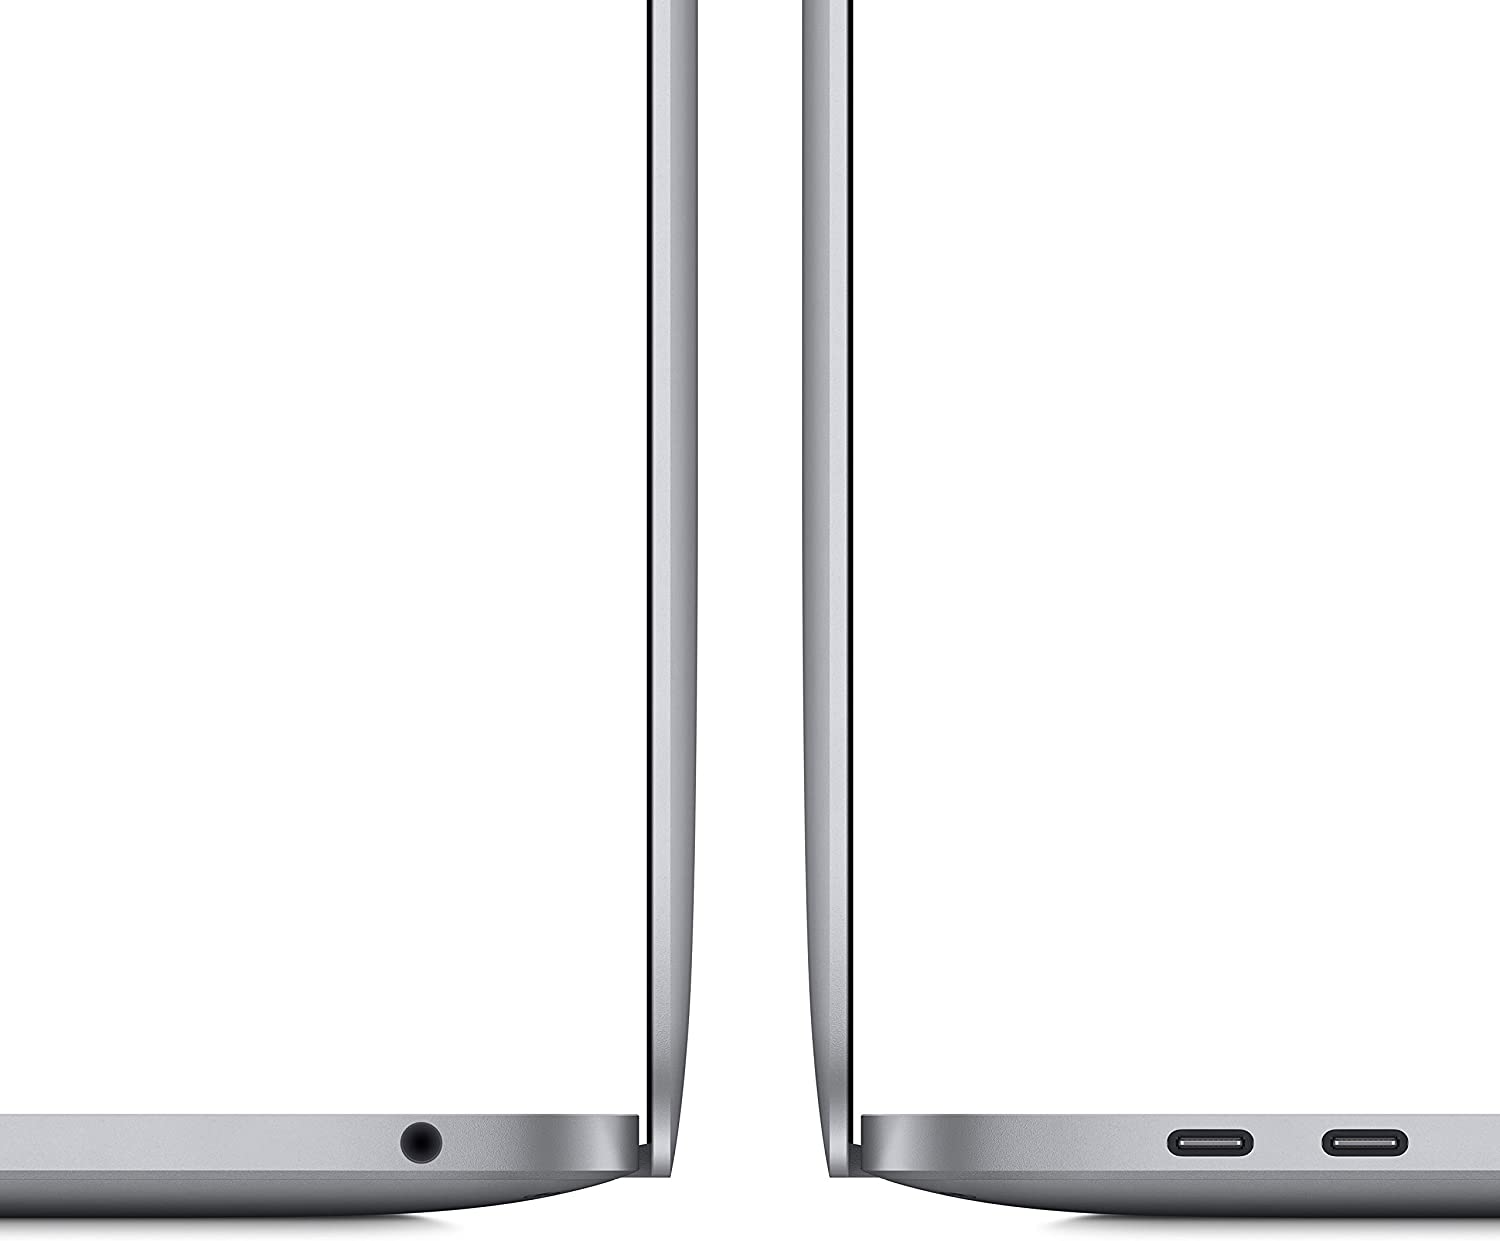 Apple MacBook Pro 13-inch 2020 –(Apple M1 chip with 8‑core CPU and 8‑core GPU, 8GB RAM, 256GB SSD) - Space Grey - English Keyboard (Renewed)